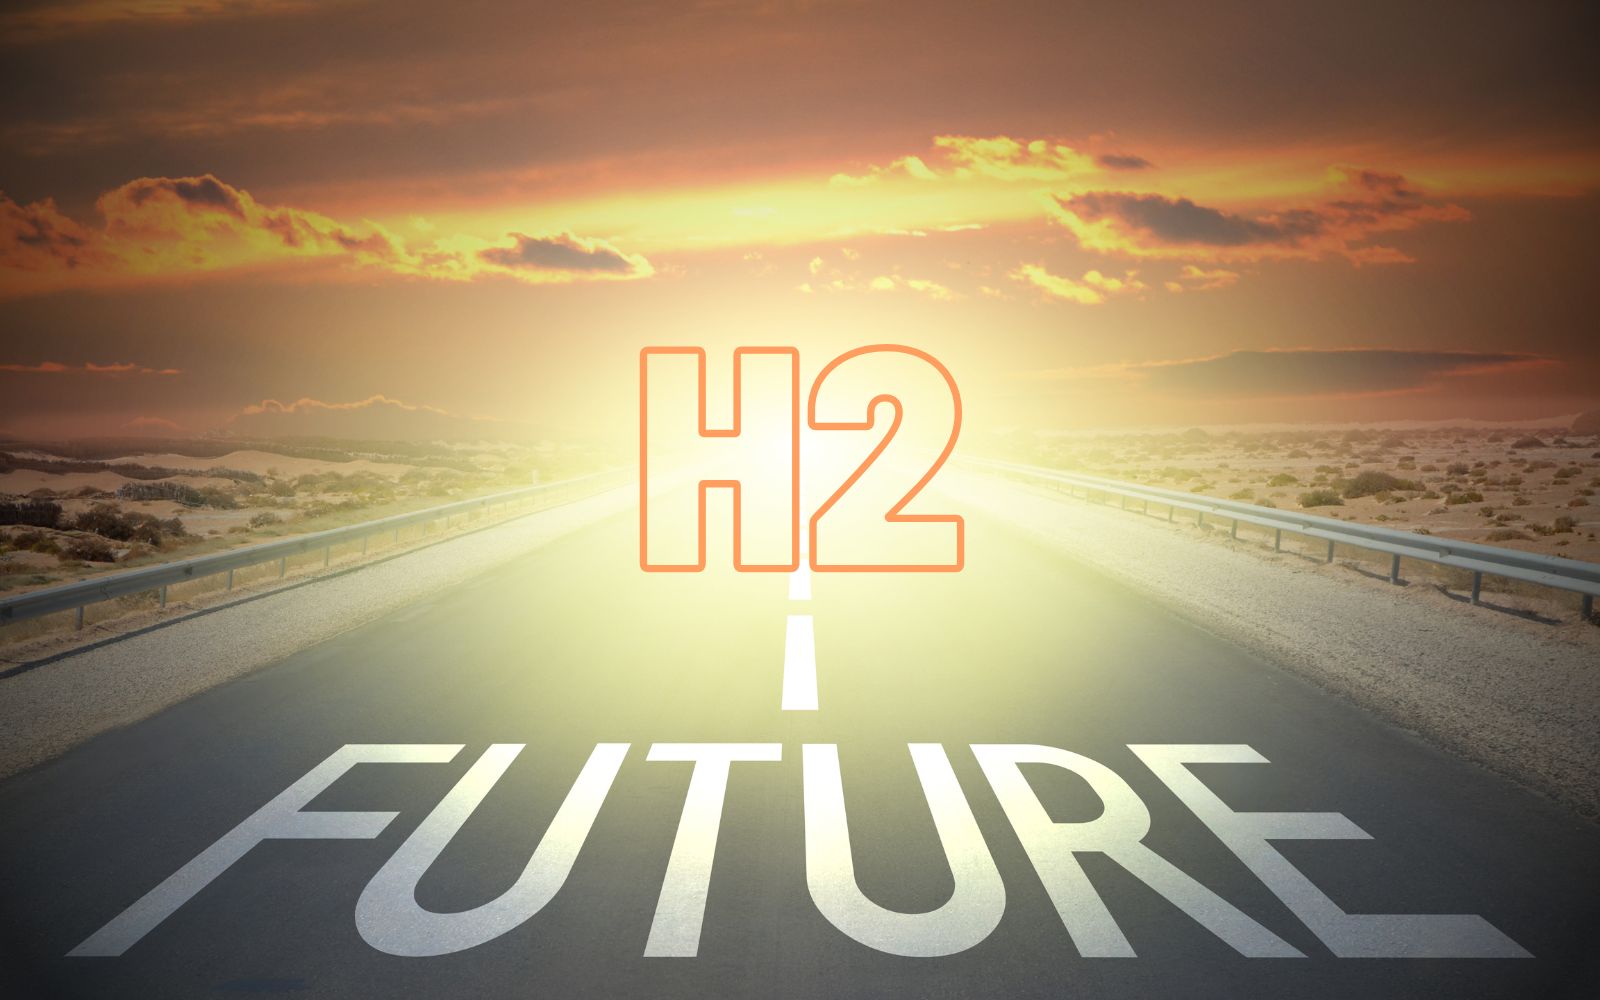 H2 future struggles and wins